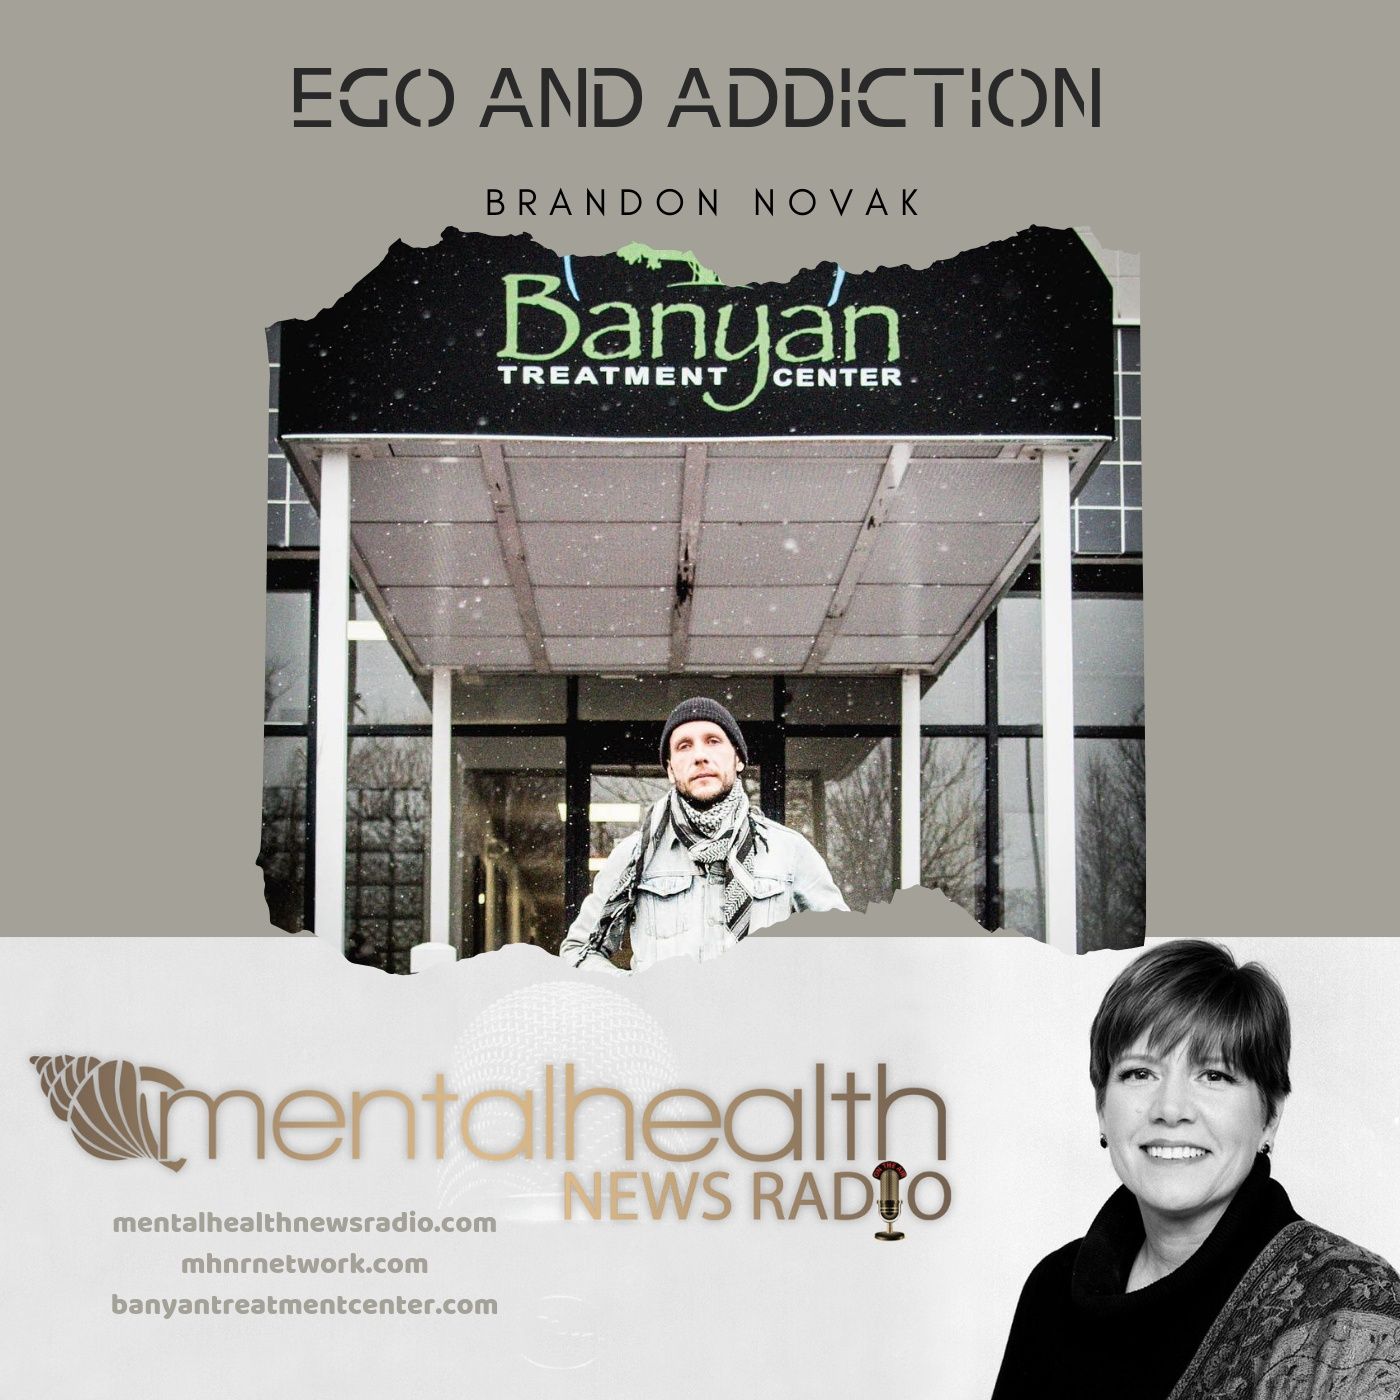 Mental Health News Radio - Ego and Addiction with Brandon Novak